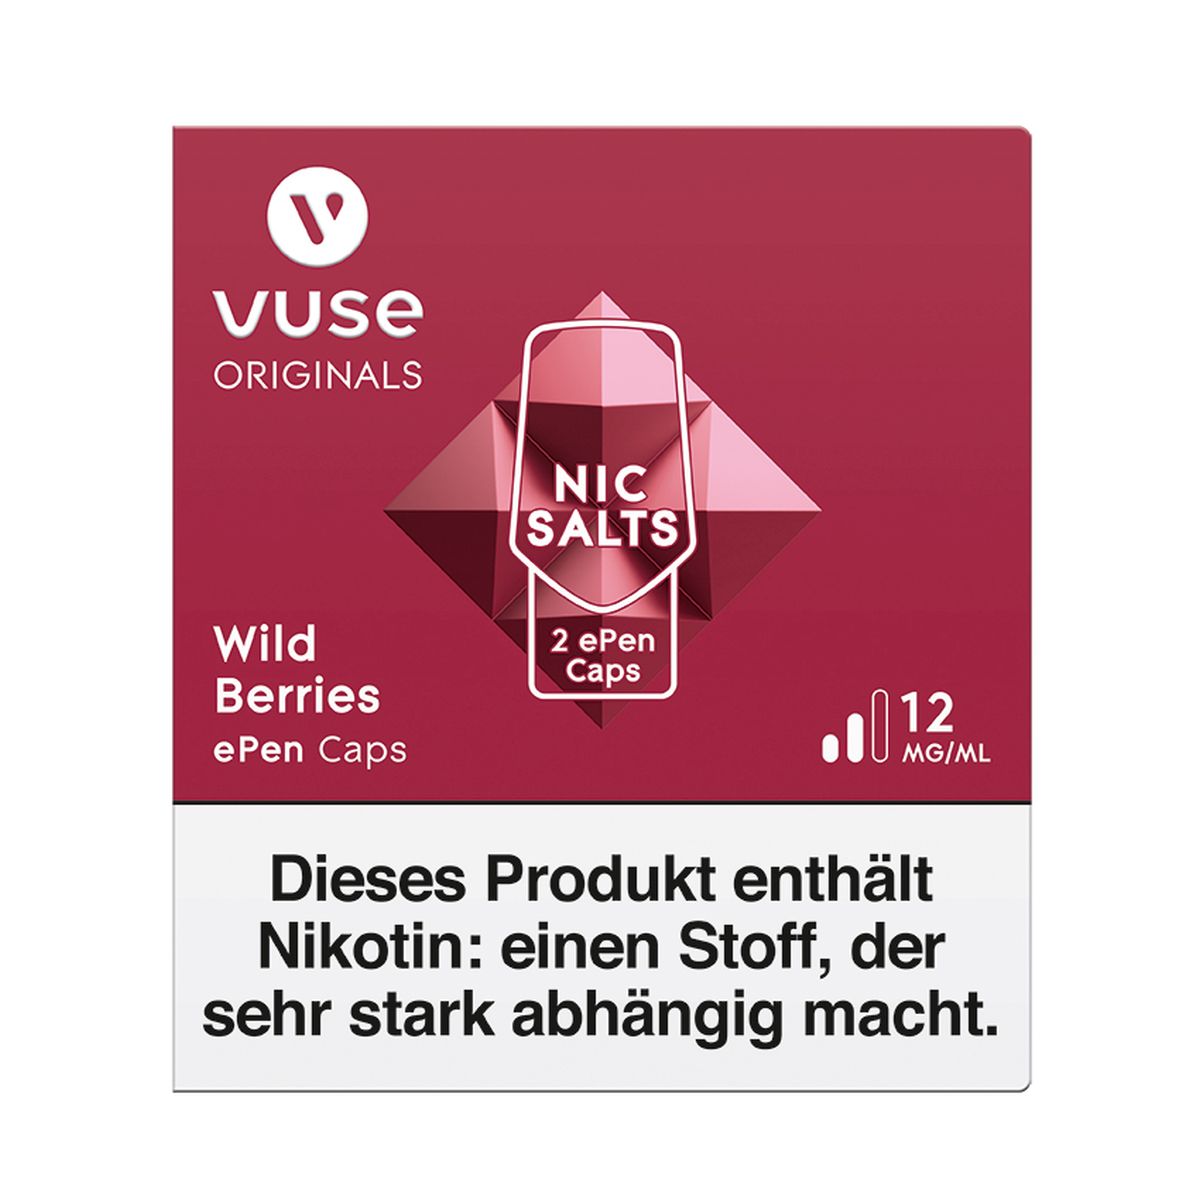 Vuse Vuse ePen Caps Wild Berries Nic Salts 12mg Nikotin 2ml bei www.Tabakring.de kaufen